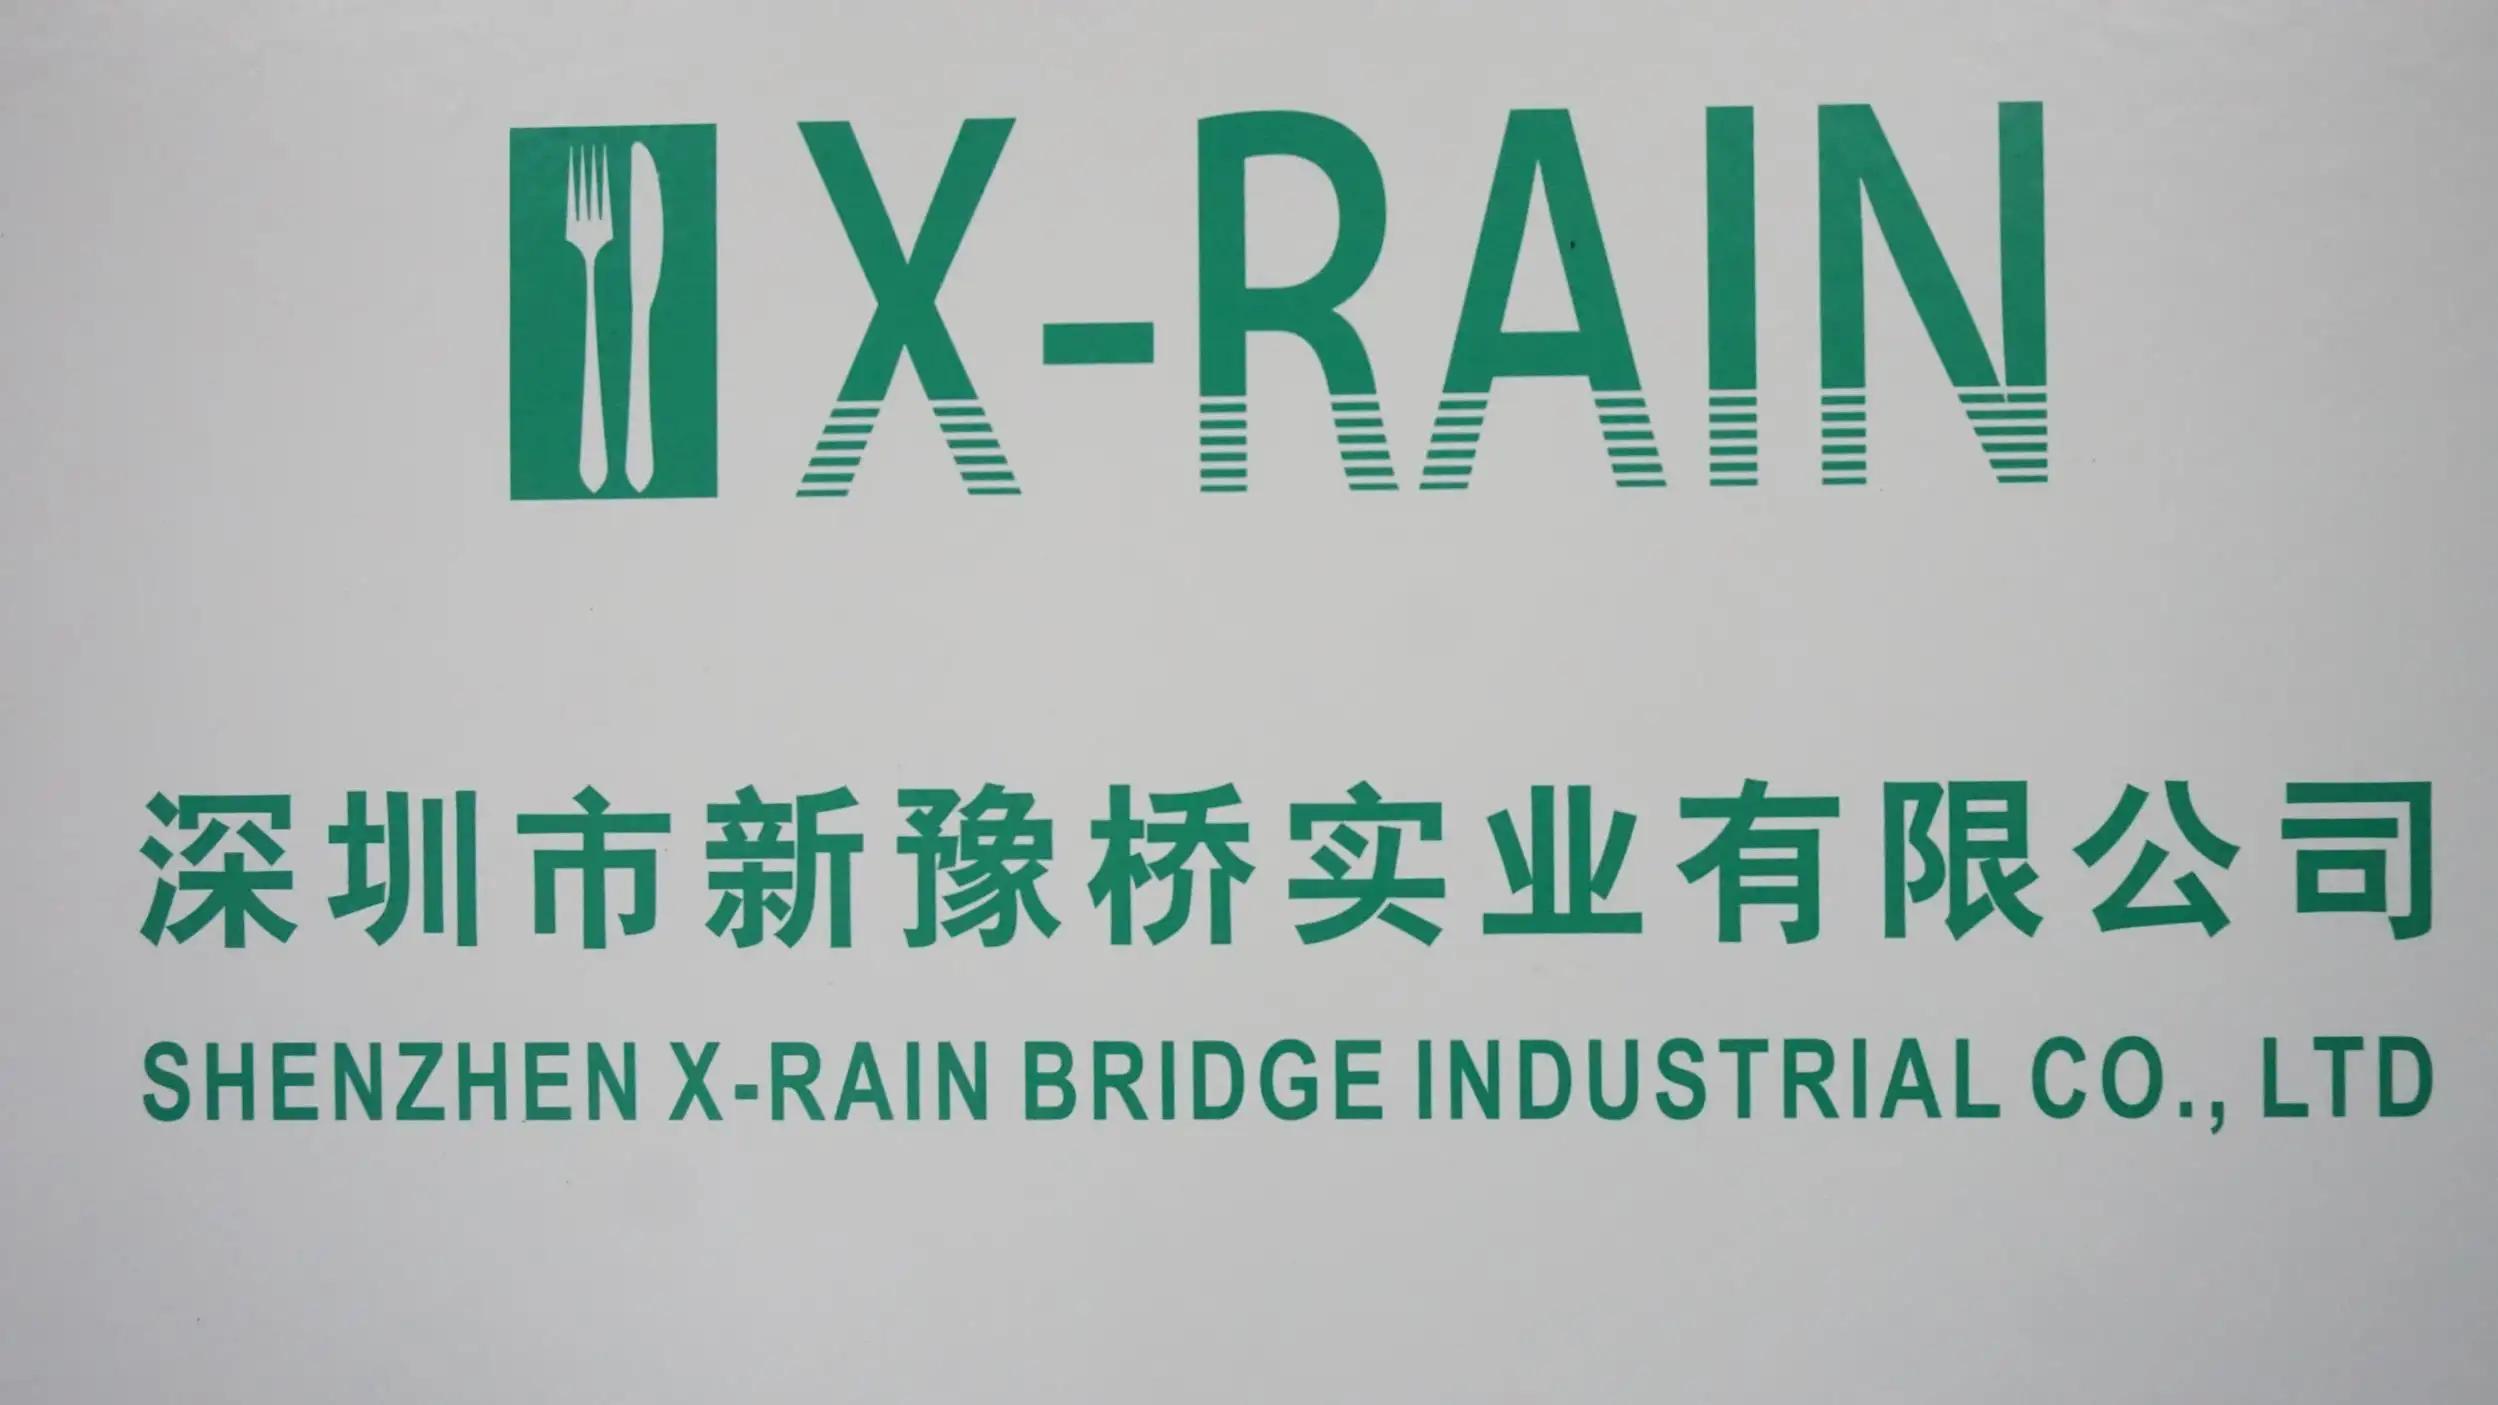 Shenzhen X-Rain Bridge Industrial Co., Ltd.